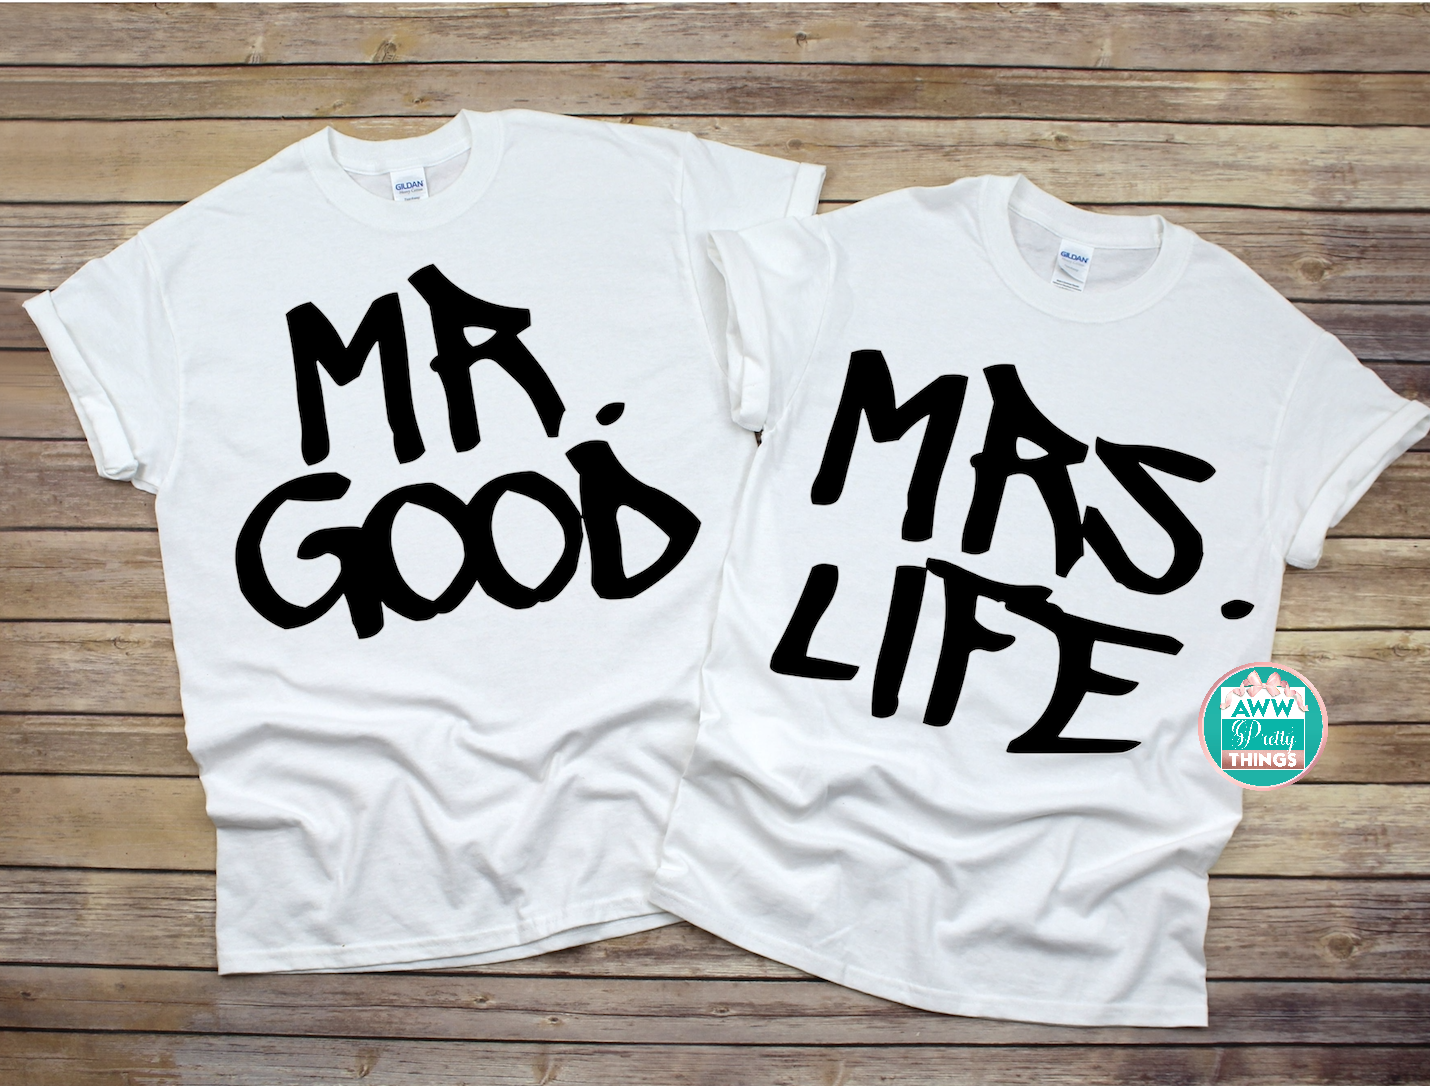 Mr. Good Mrs. Life Couples Shirts